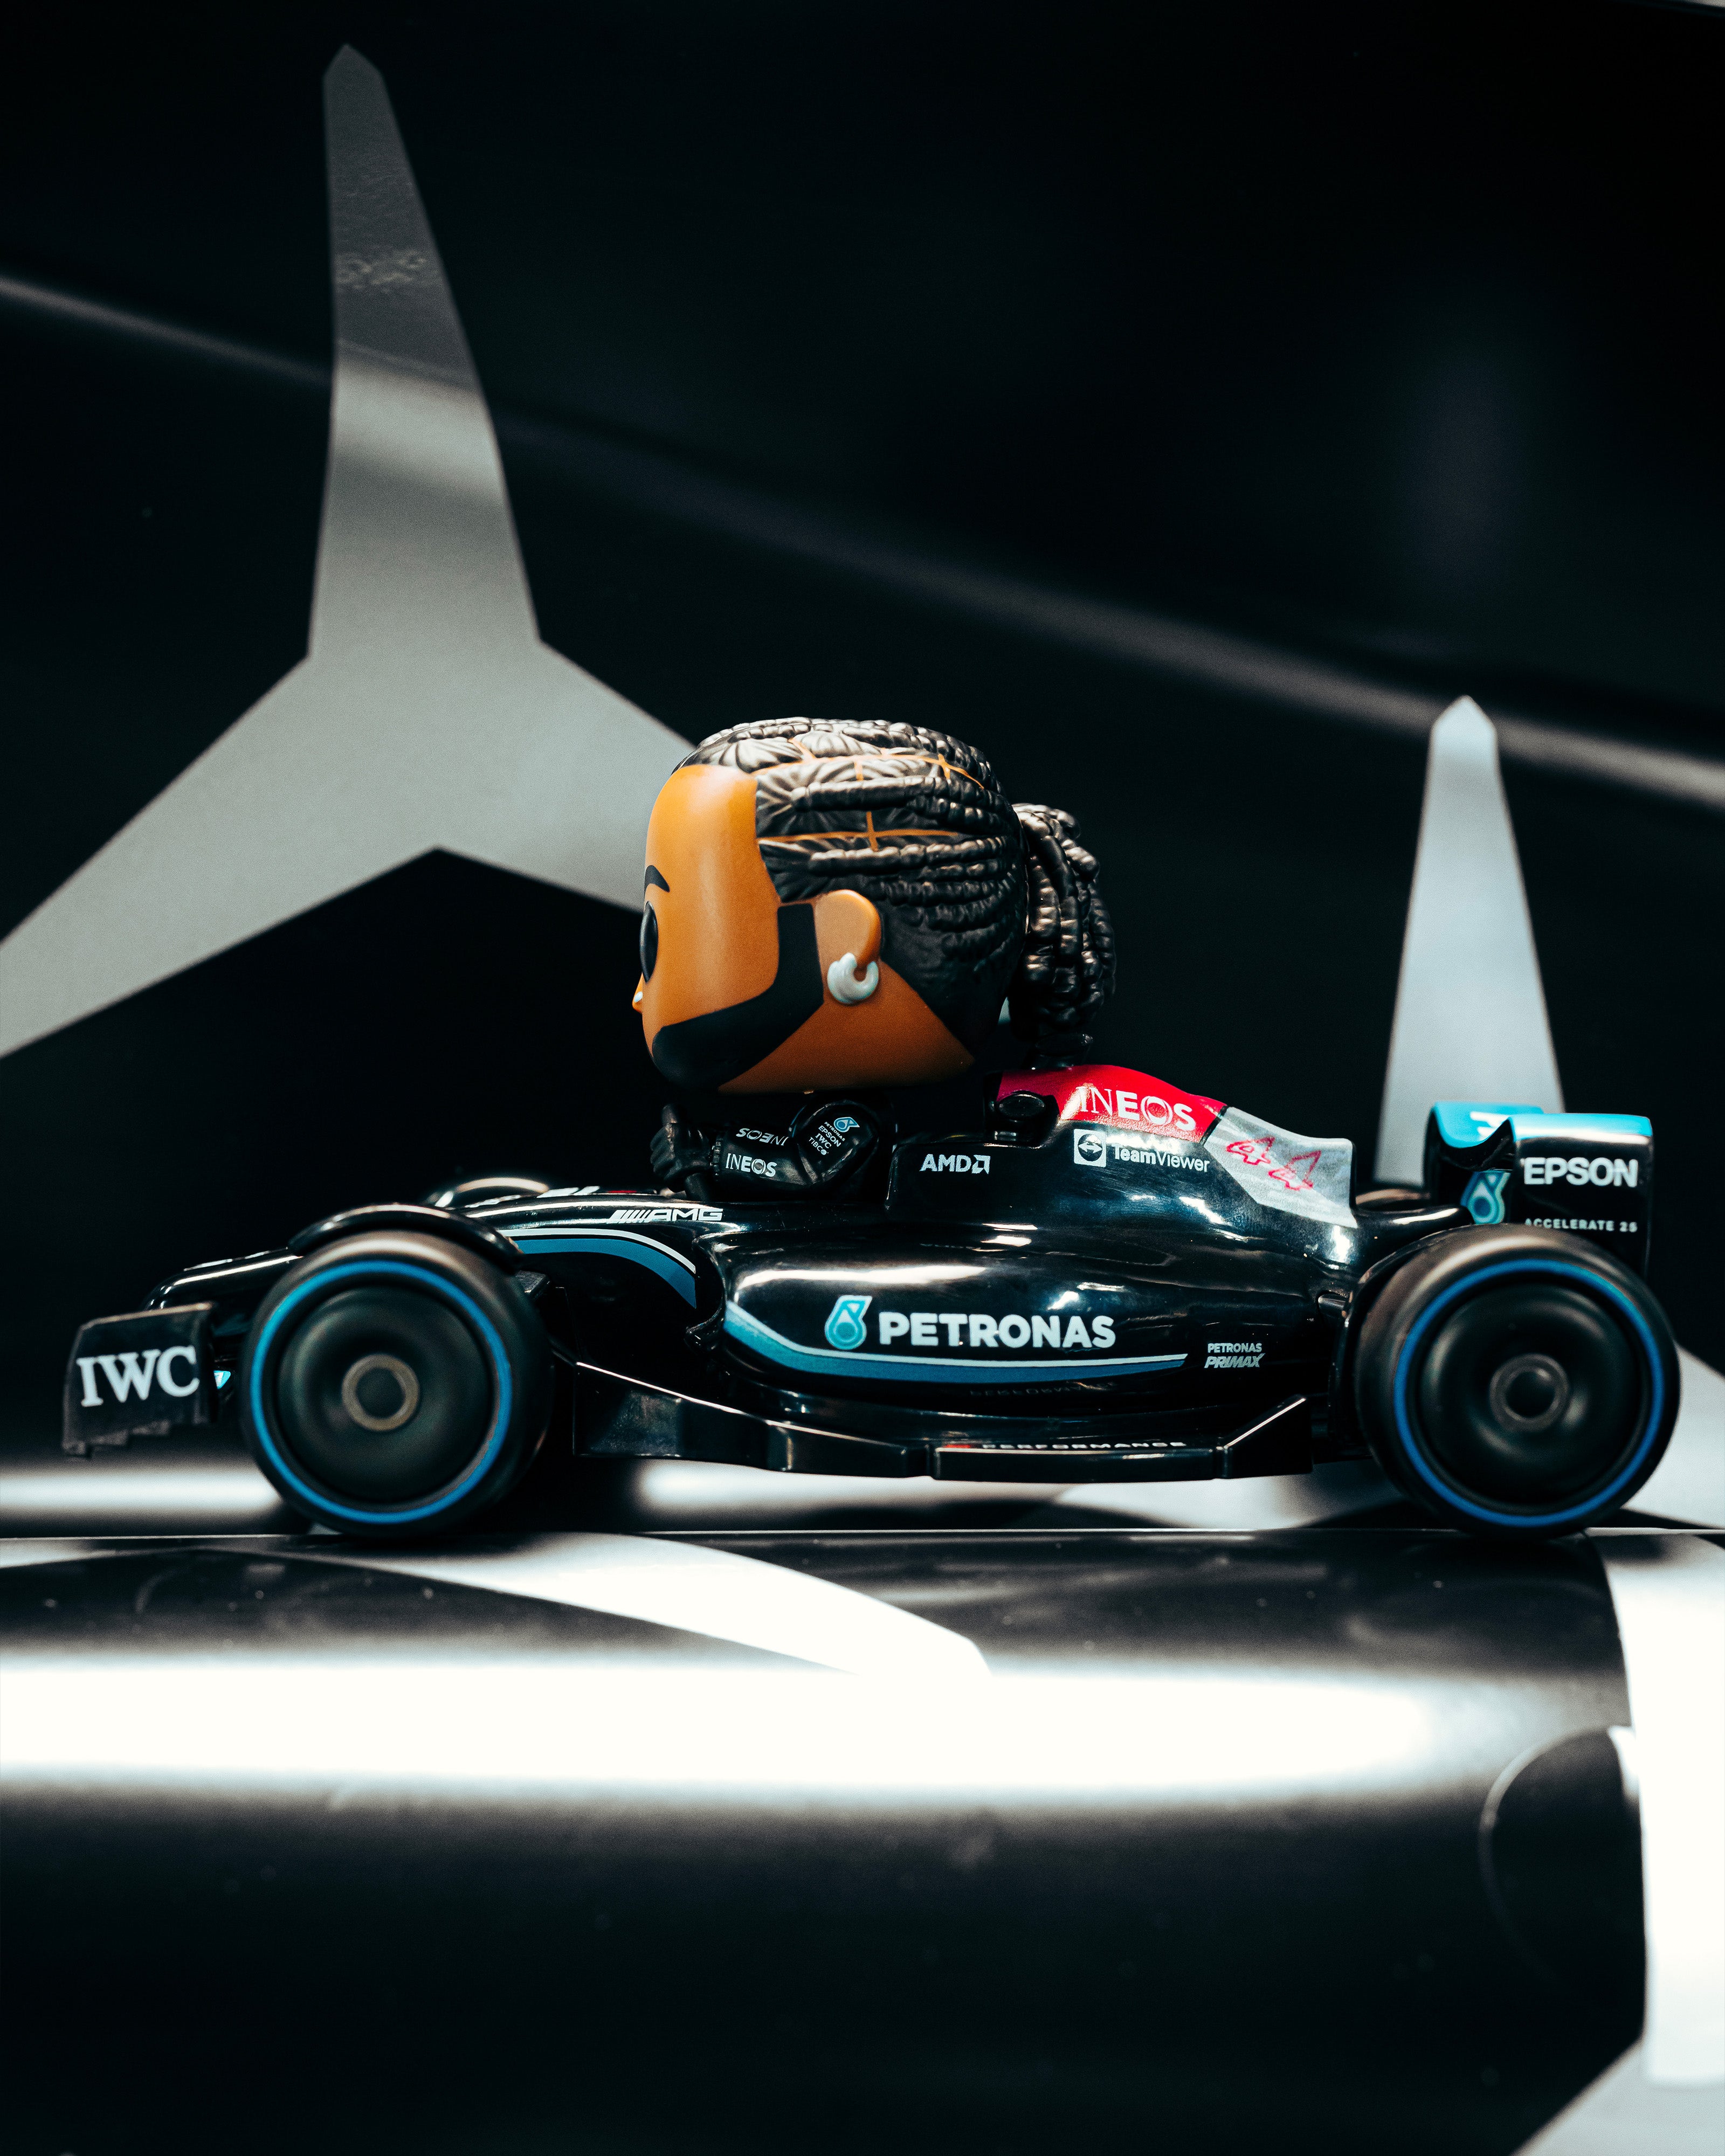 Funko Pop! Racing: Lewis Hamilton